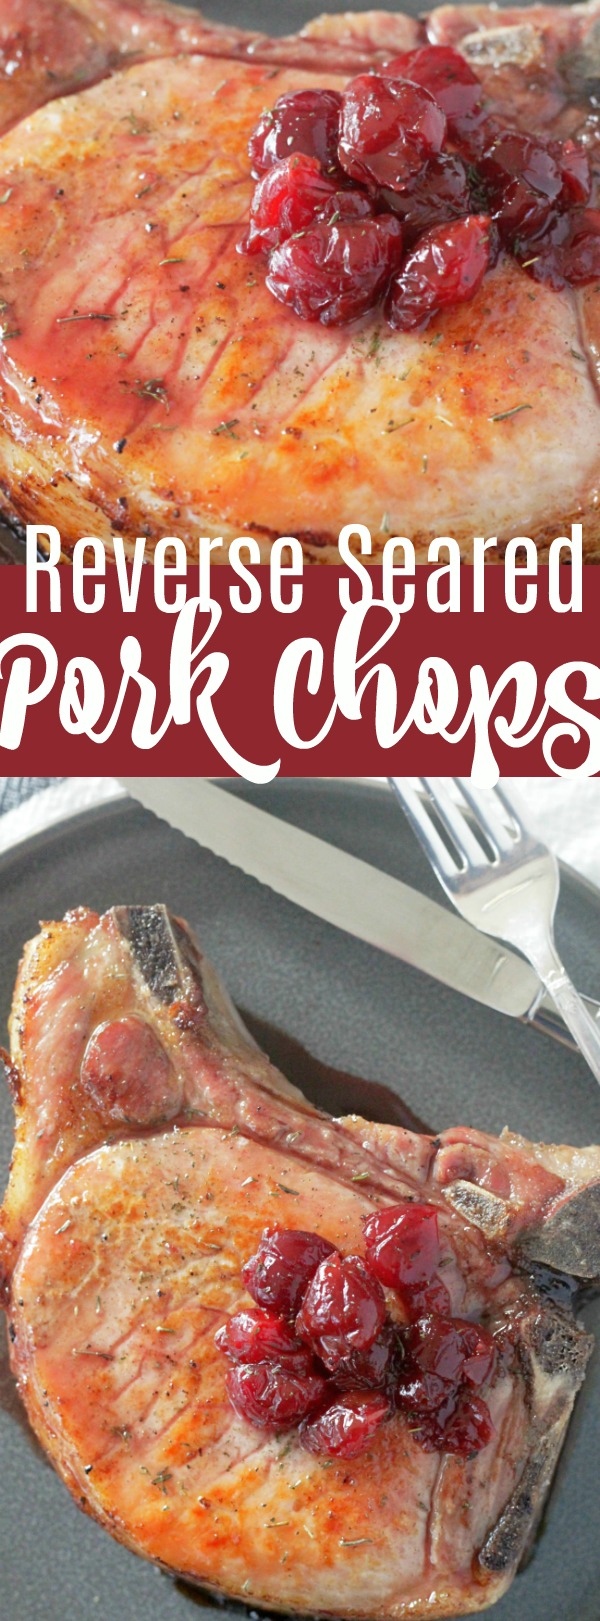 Reverse Seared Pork Chops with Cherry Pan Sauce #porkrecipes #porkchops #datenightdinnerrecipes #ohpork #ad via @foodtasticmom